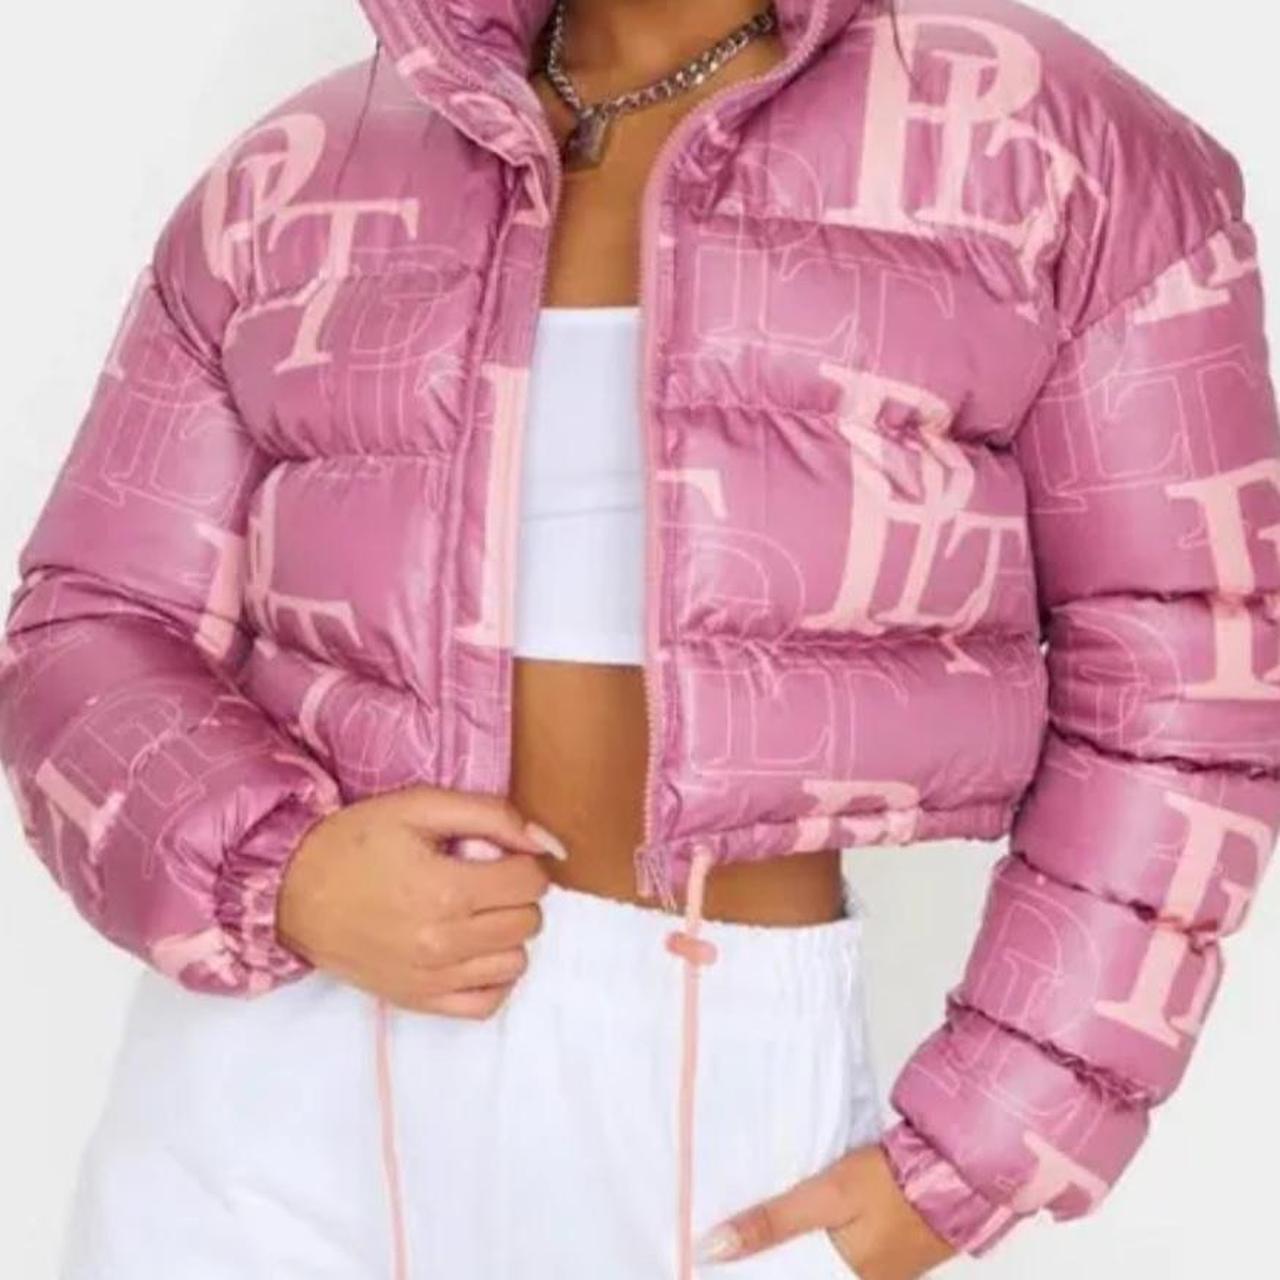 Prettylittlething Pink Crop Puffer Jacket